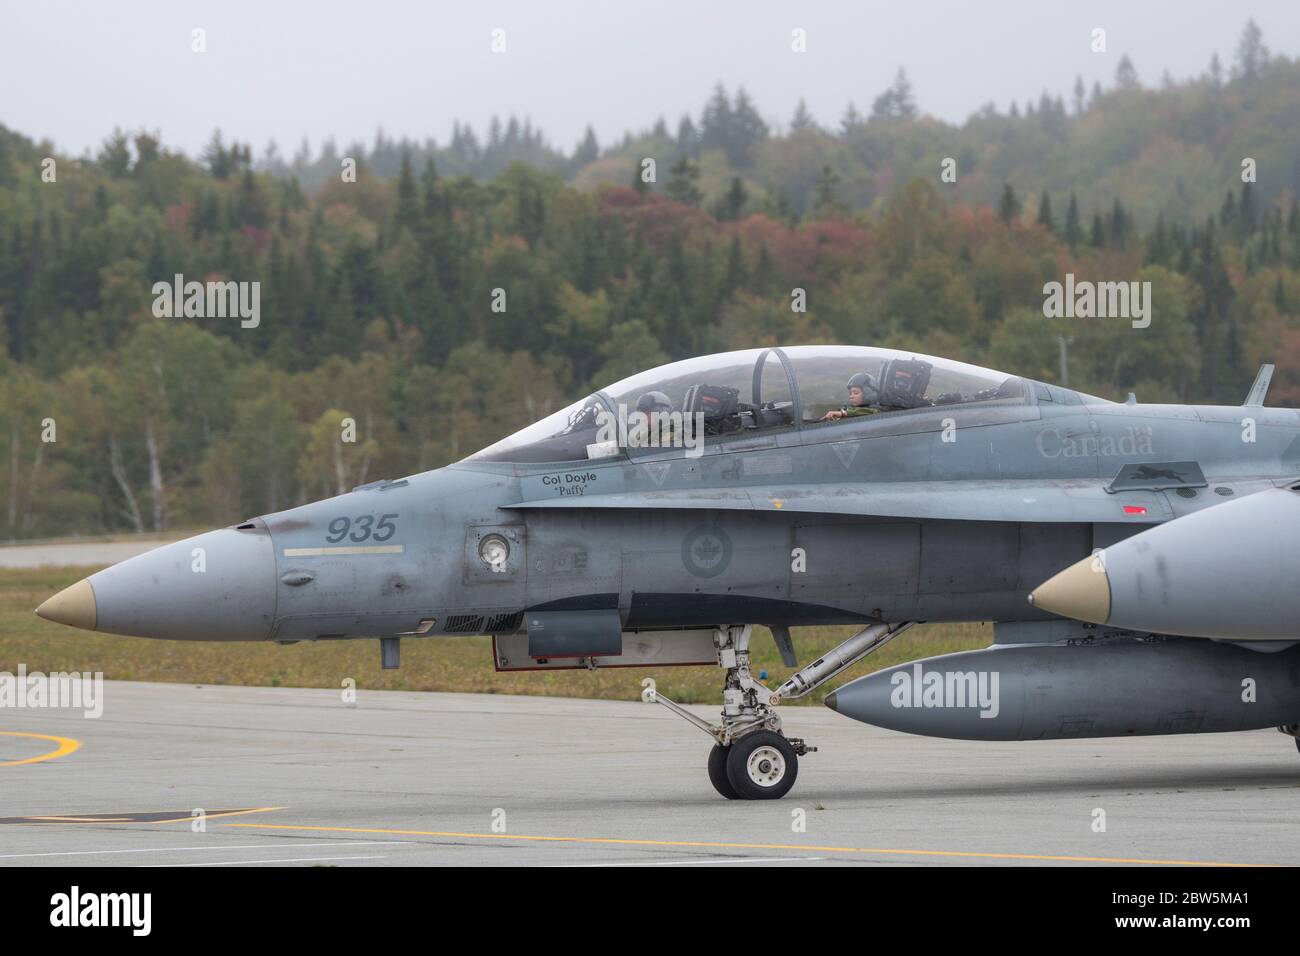 Saint John, New Brunswick, Canada - September 17, 2017: Pilots in a CF-18 Hornet fighter jet prepare for takeoff after visiting Saint John. Stock Photo